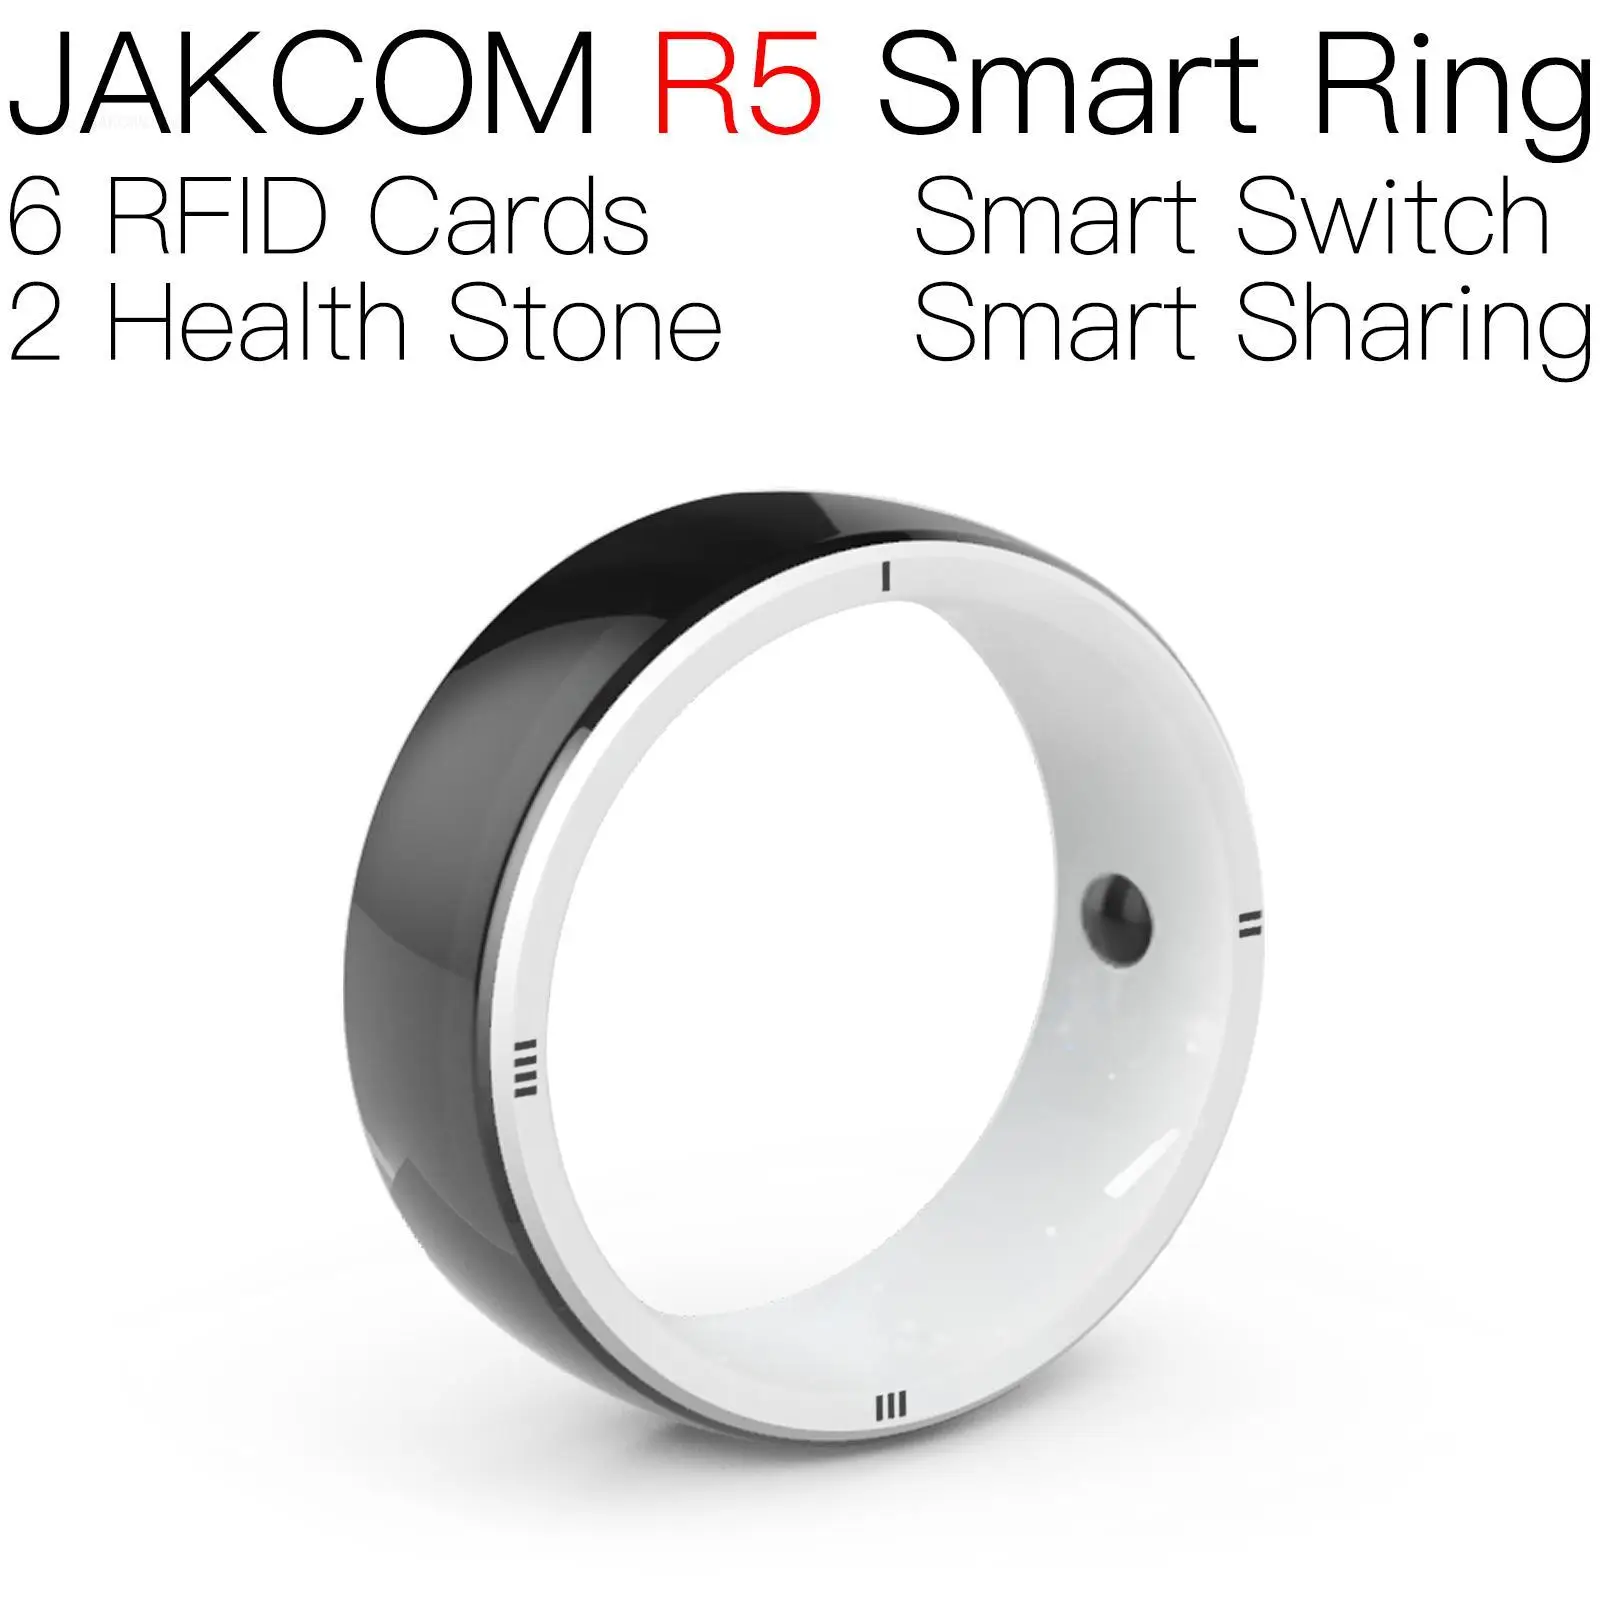 

JAKCOM R5 Smart Ring Nice than rfid 125khz rewritable sticker uid nfc card system set chipreader cat changeable xpad3 versao